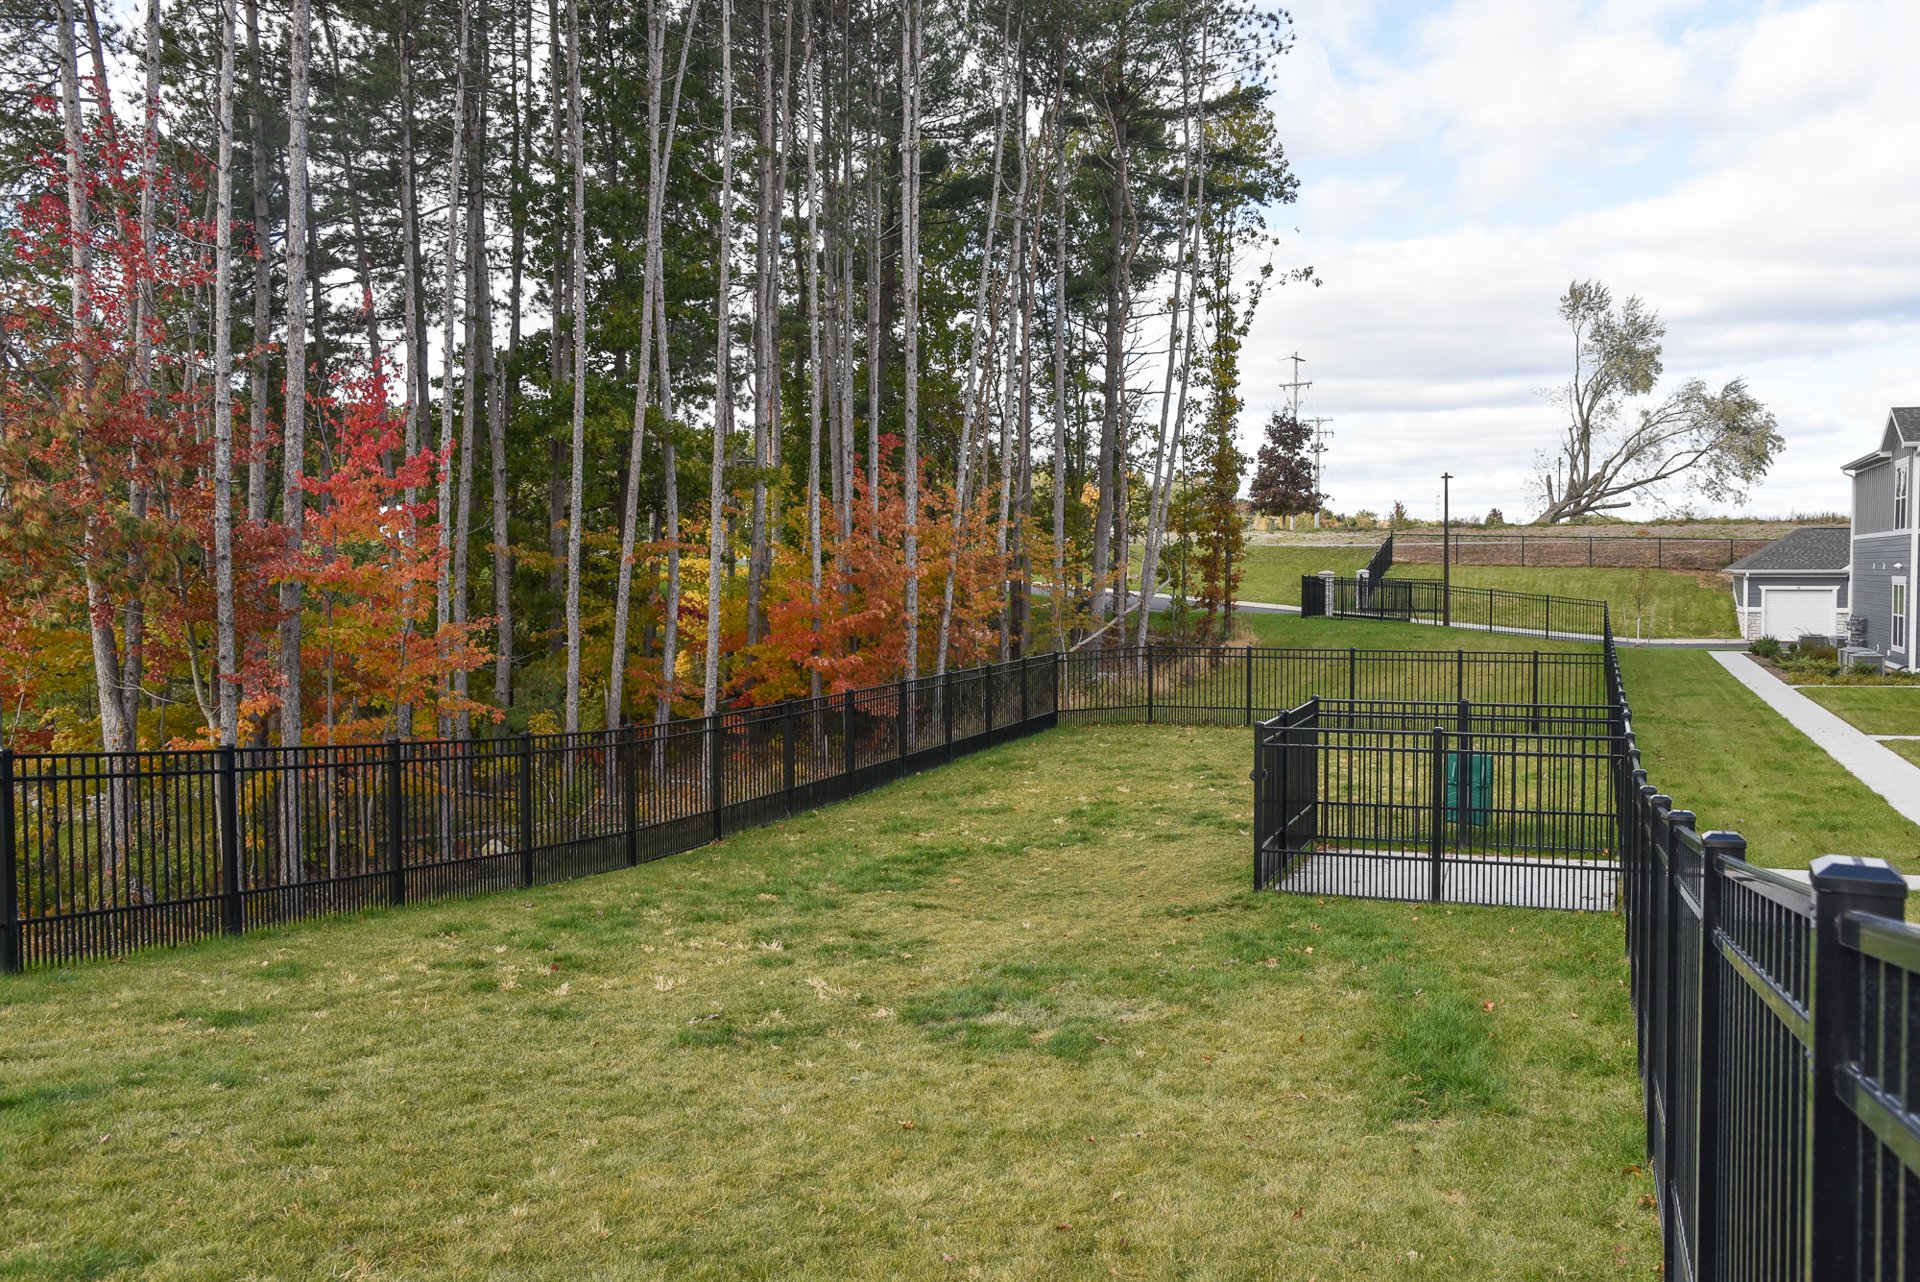 Springs at Knapp's Crossing fenced in dog park